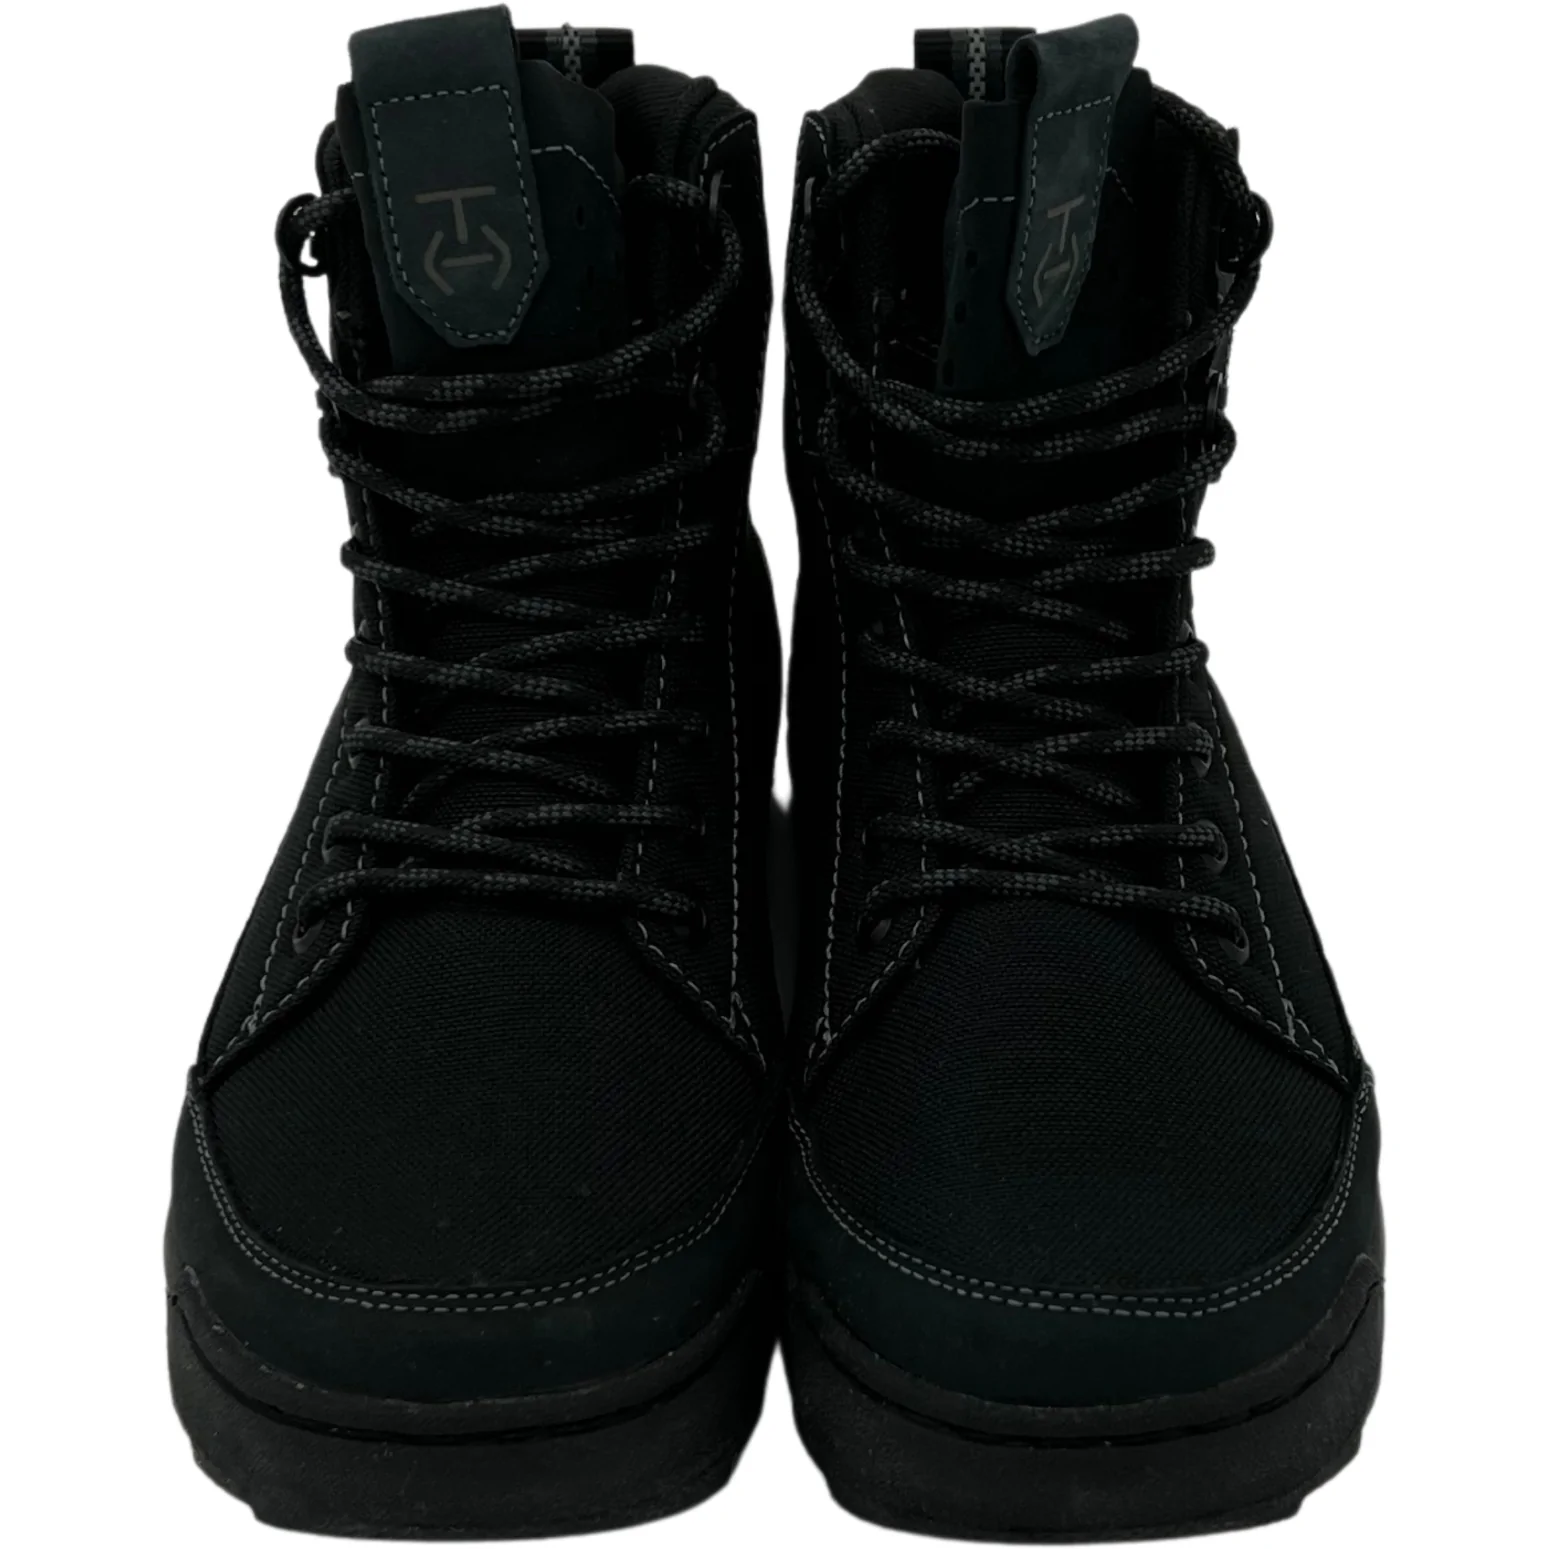 Volcom Men's Winter Boots / Roughington GTX / Black / Size 6.5